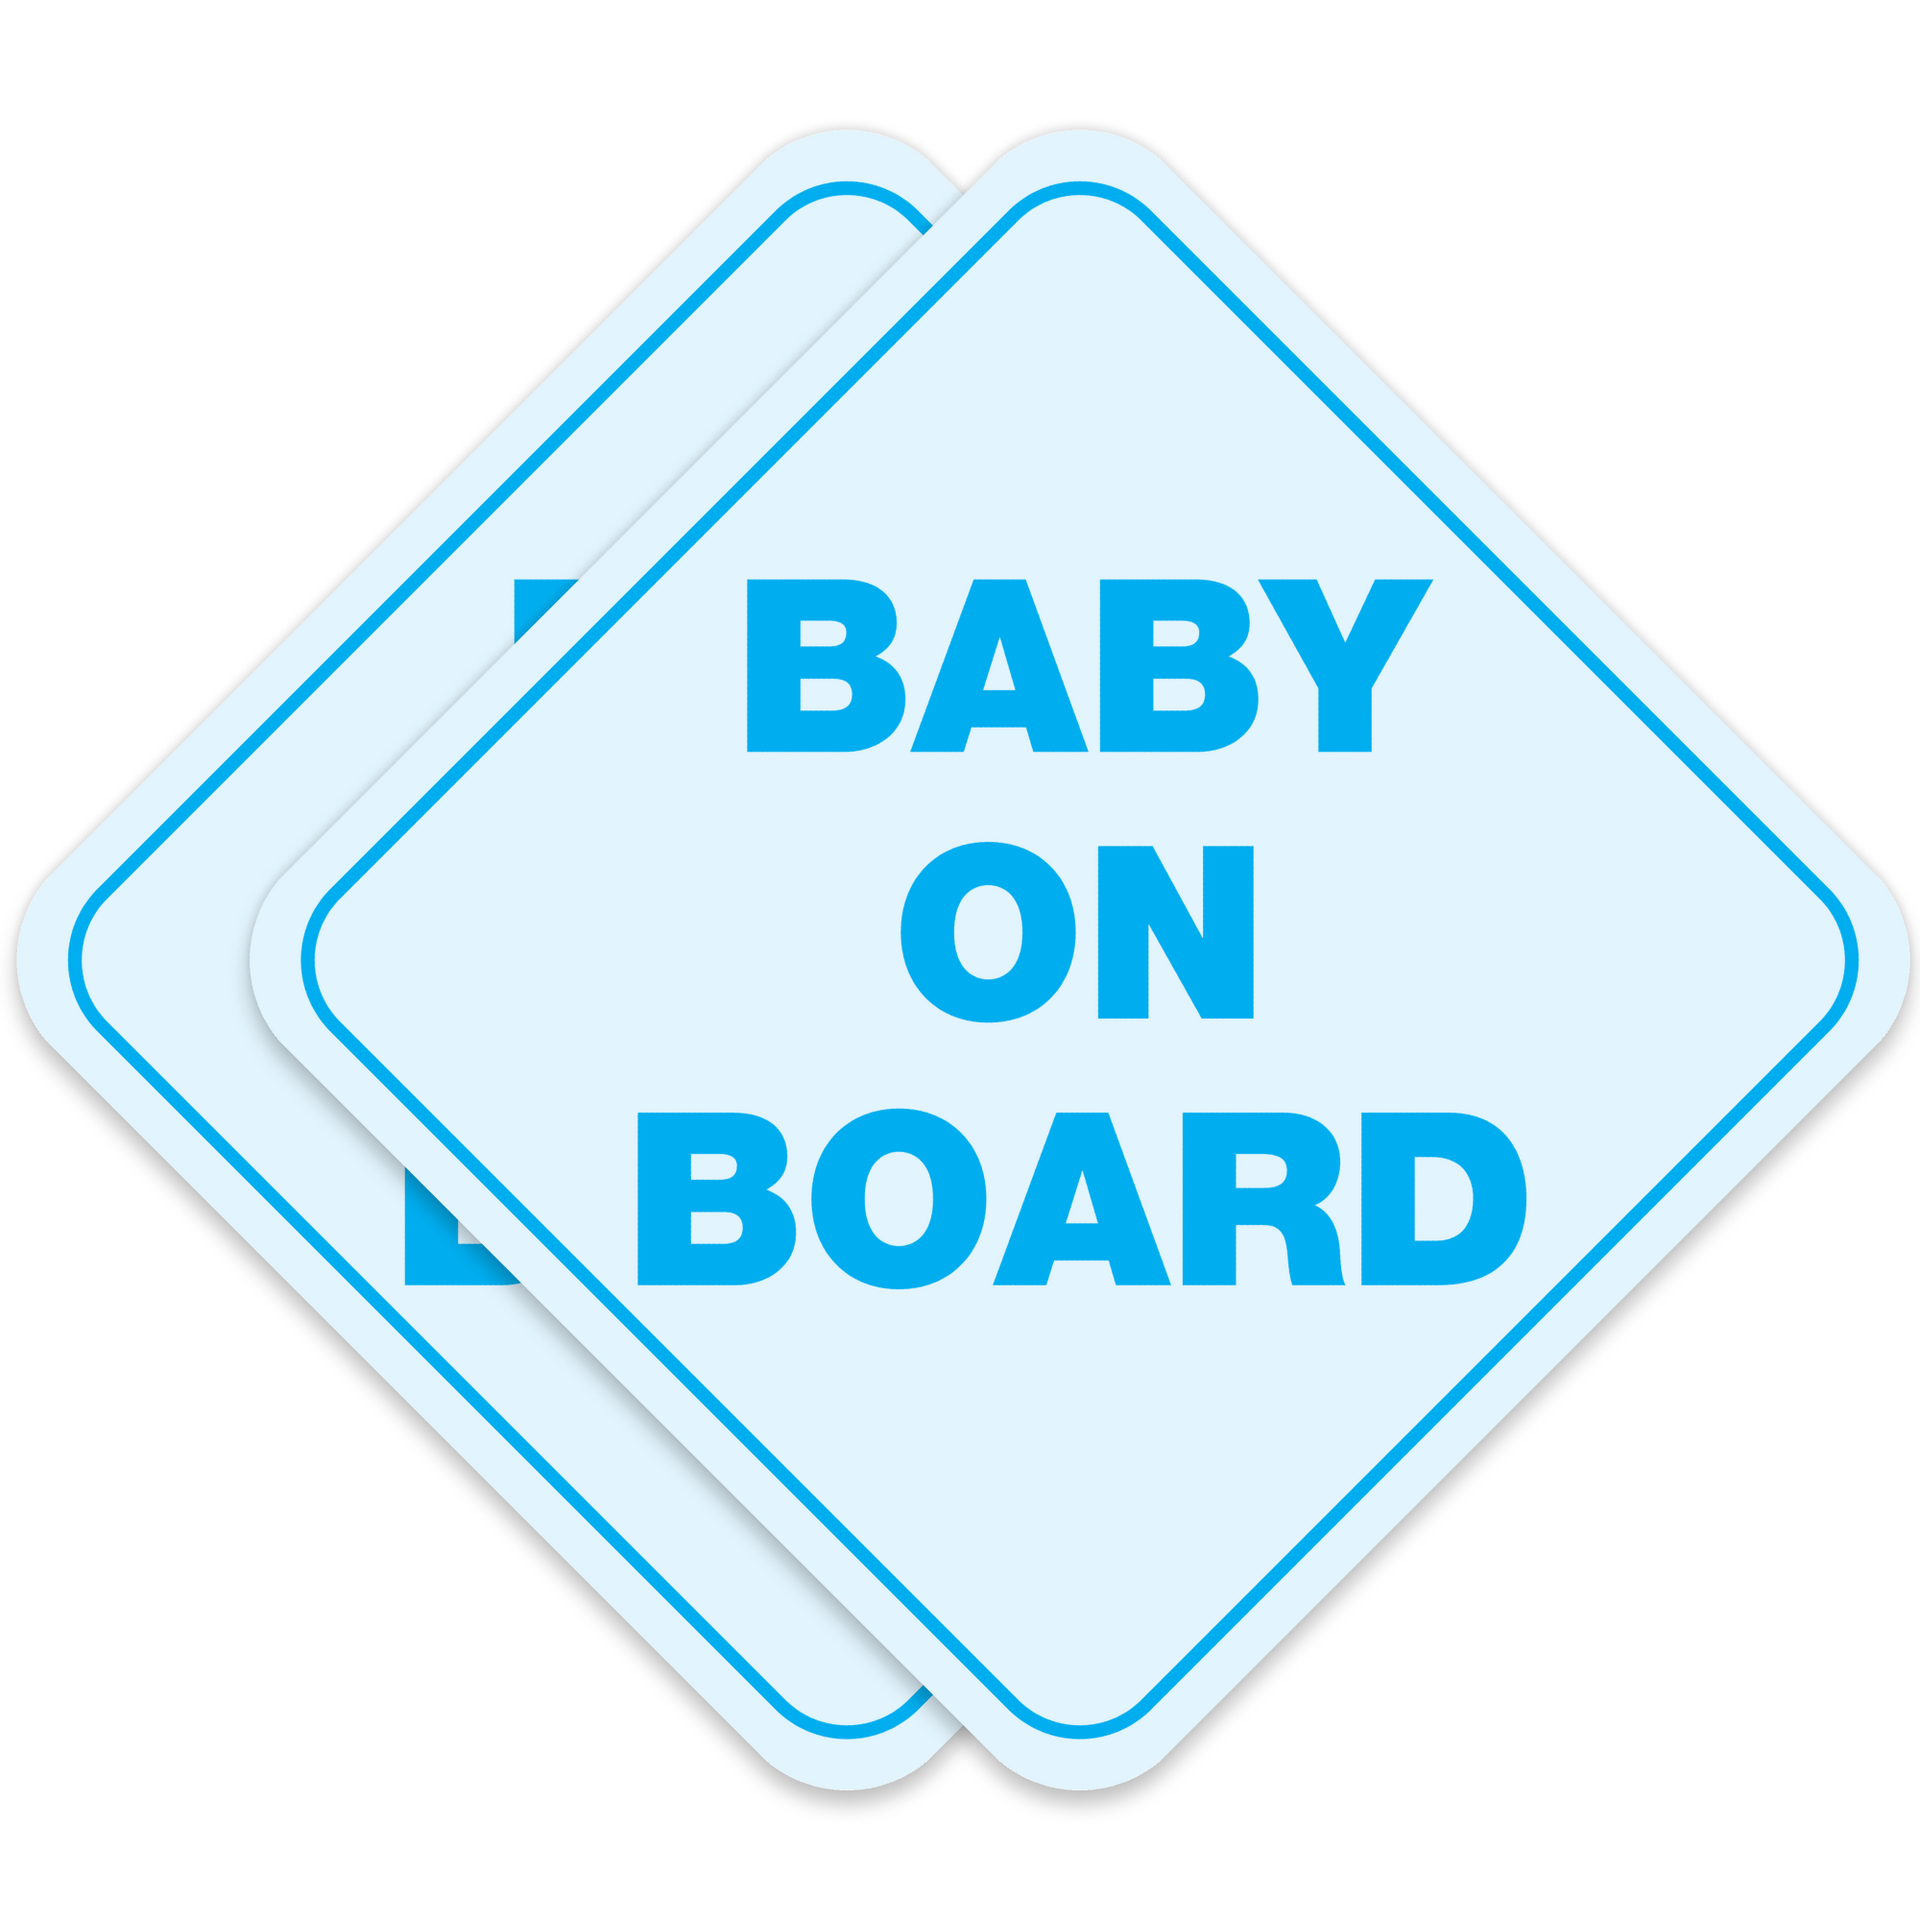 Adhésif / Autocollant bébé à bord - BD Nuage - Bleu - Kiabi - 14.39€